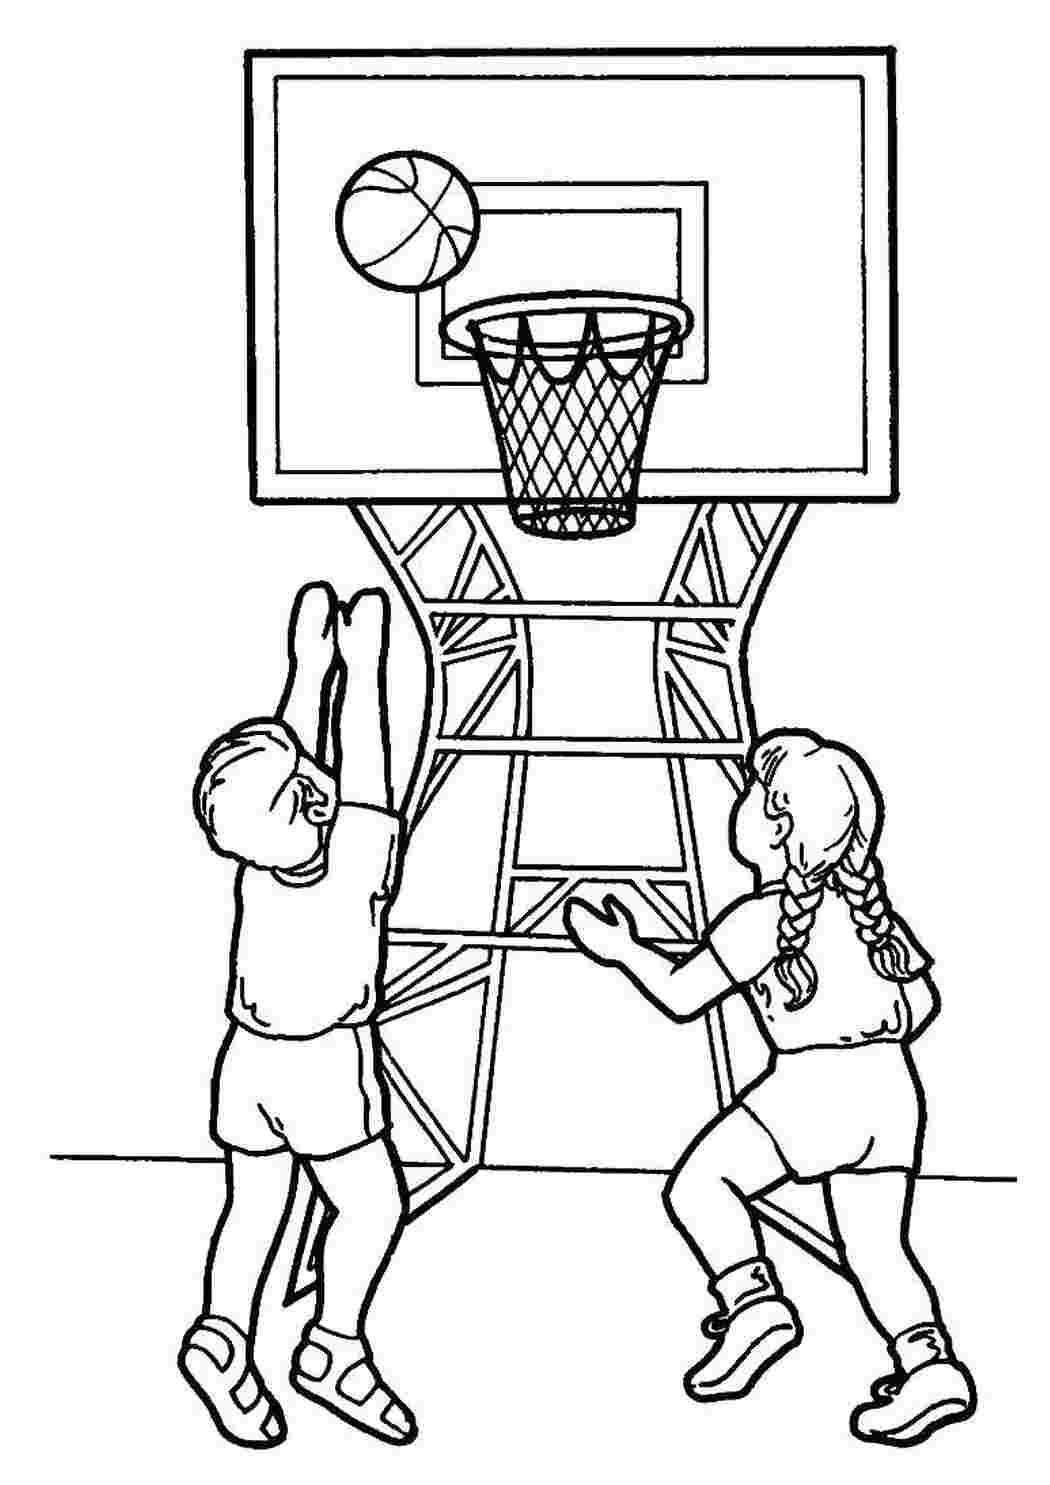 Раскраски Дети играют в баскетбол Спорт Спорт, баскетбол, мяч, игра